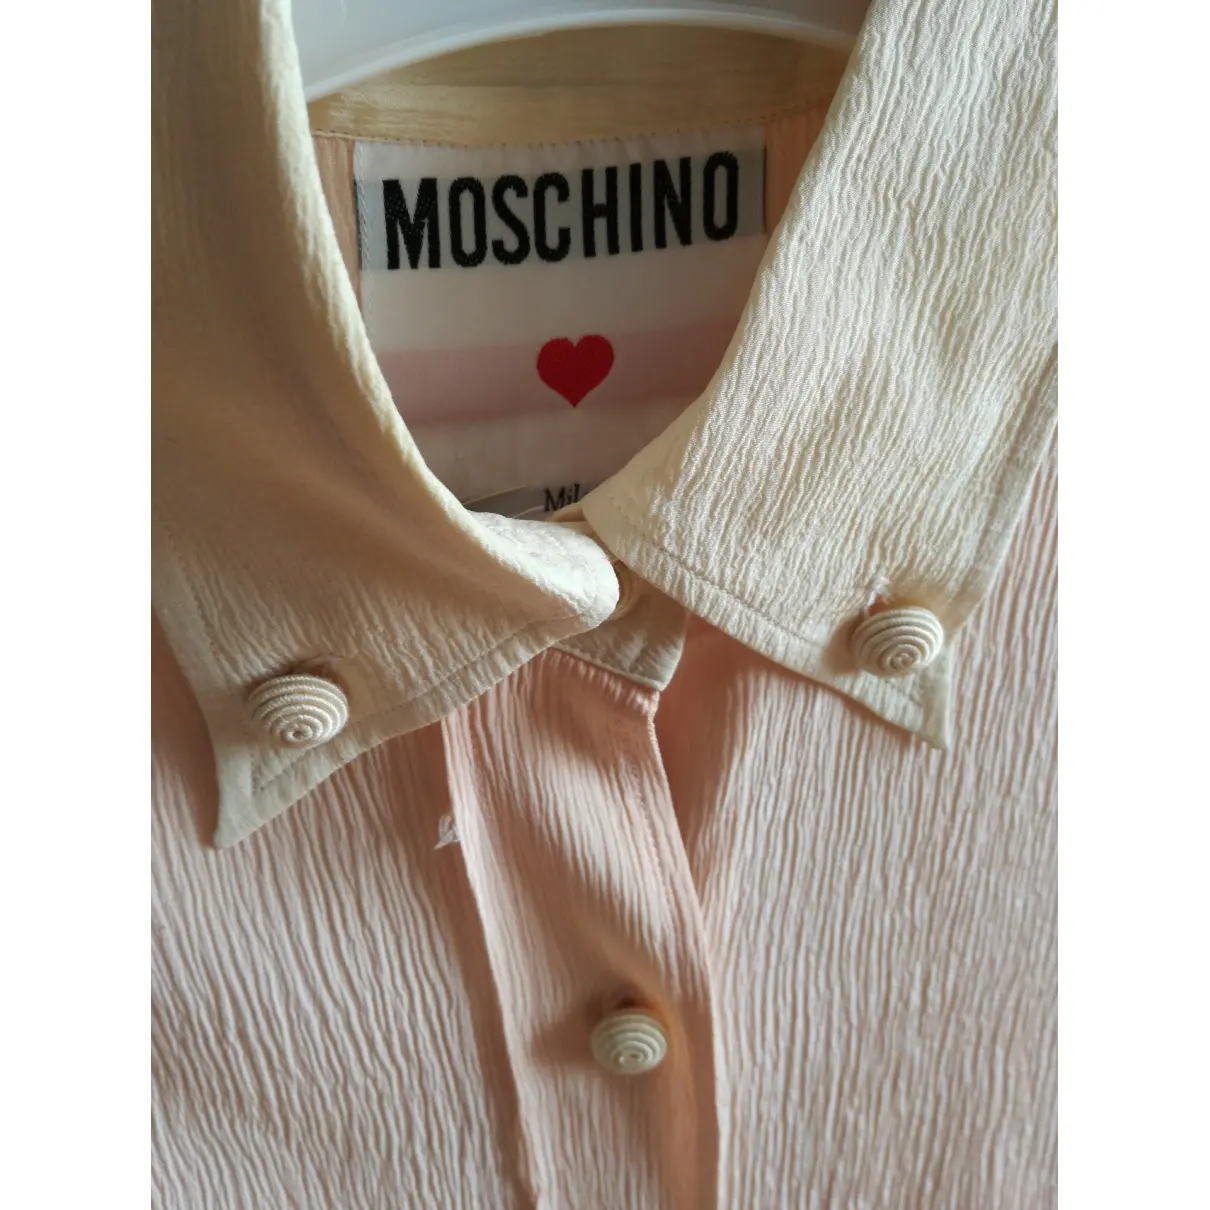 Moschino Silk shirt for sale - Vintage